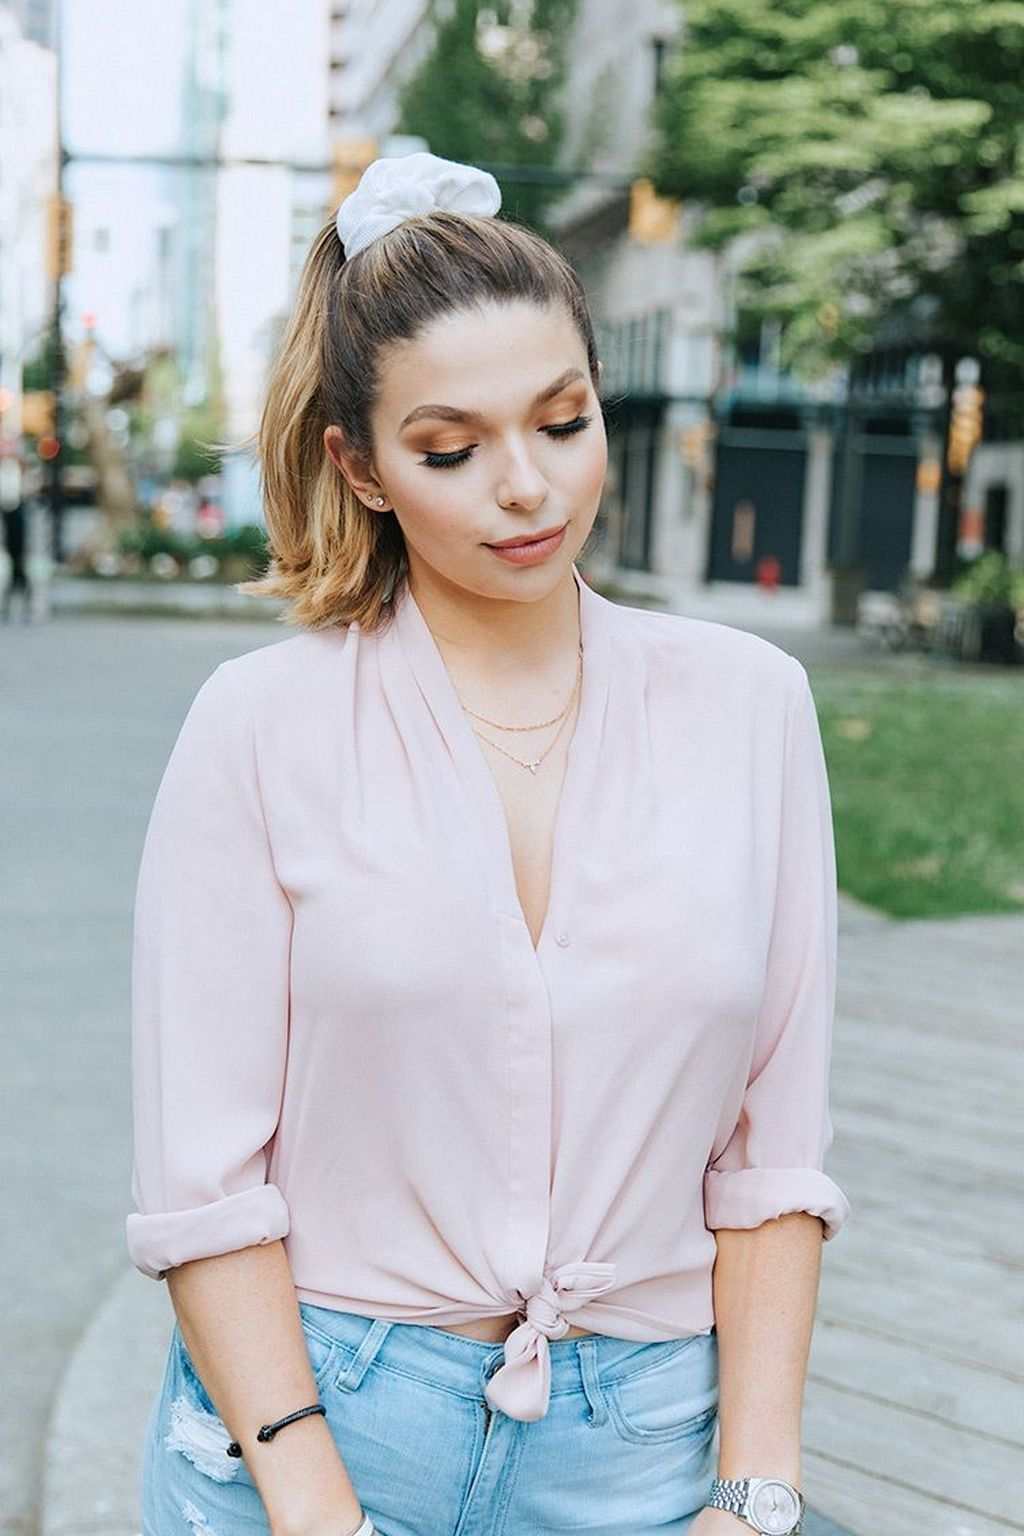 Hårtillbehör scrunchie vit mode trend rosa skjorta blus hårstil idéer